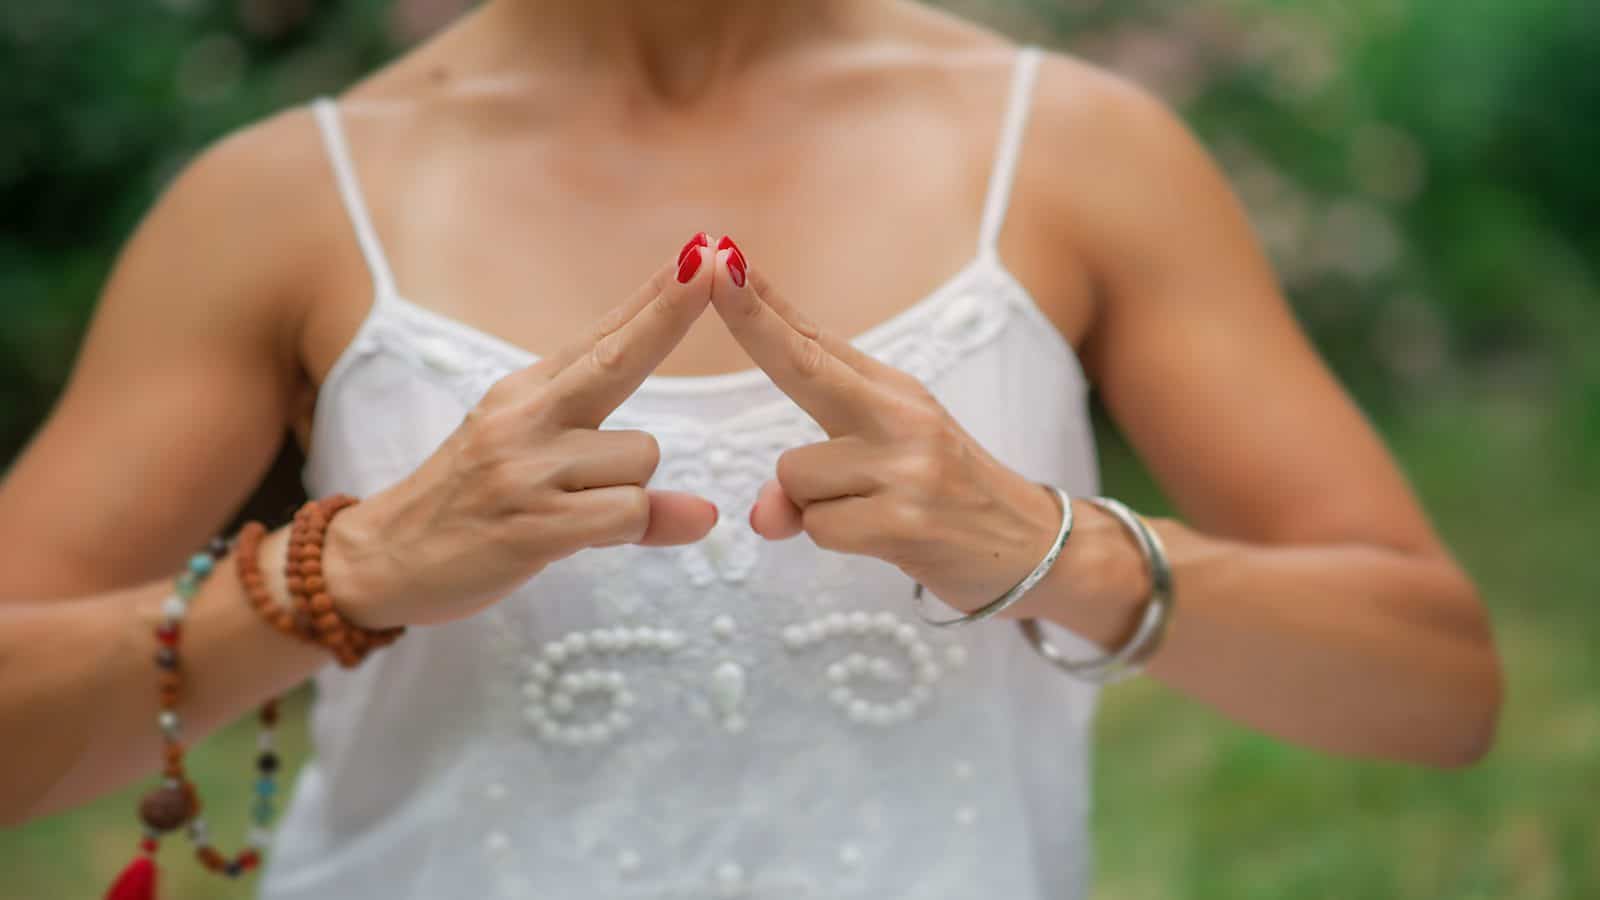 Yogi Explains How Kundalini Yoga Can Awaken Your Soul